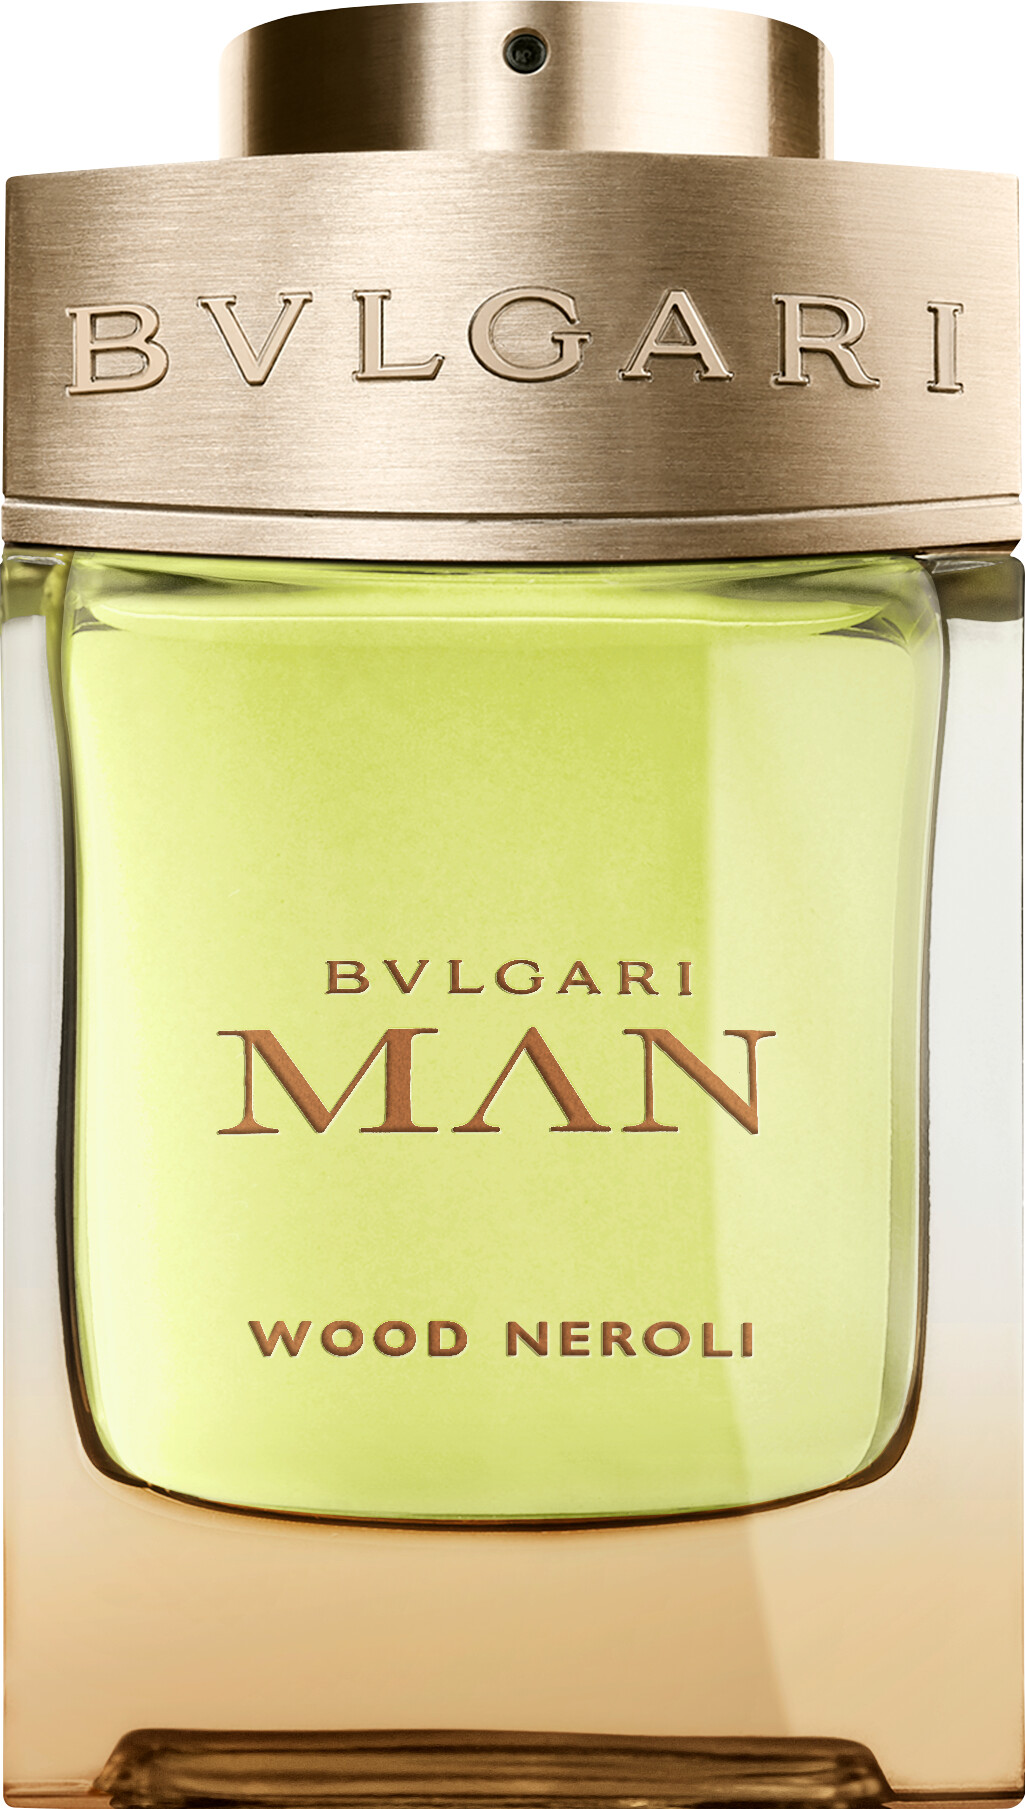 bvlgari man wood neroli 100ml